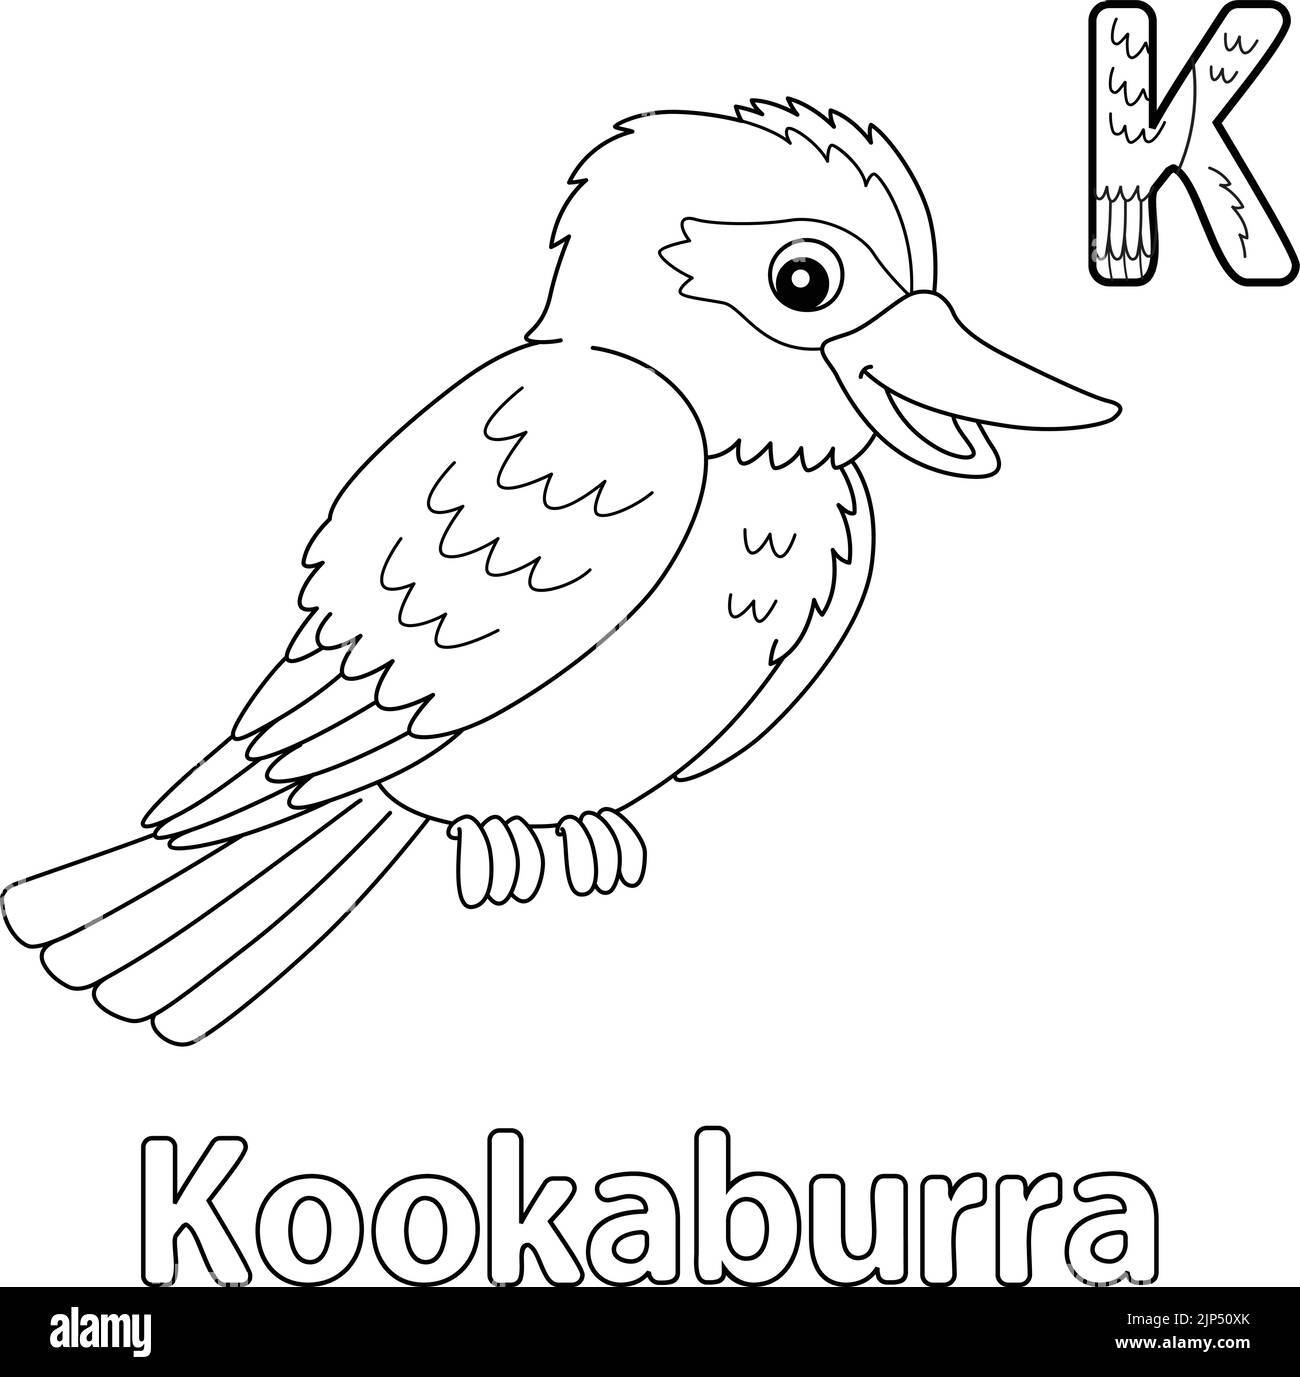 Kookaburra Alphabet ABC Coloring Page K Stock Vector